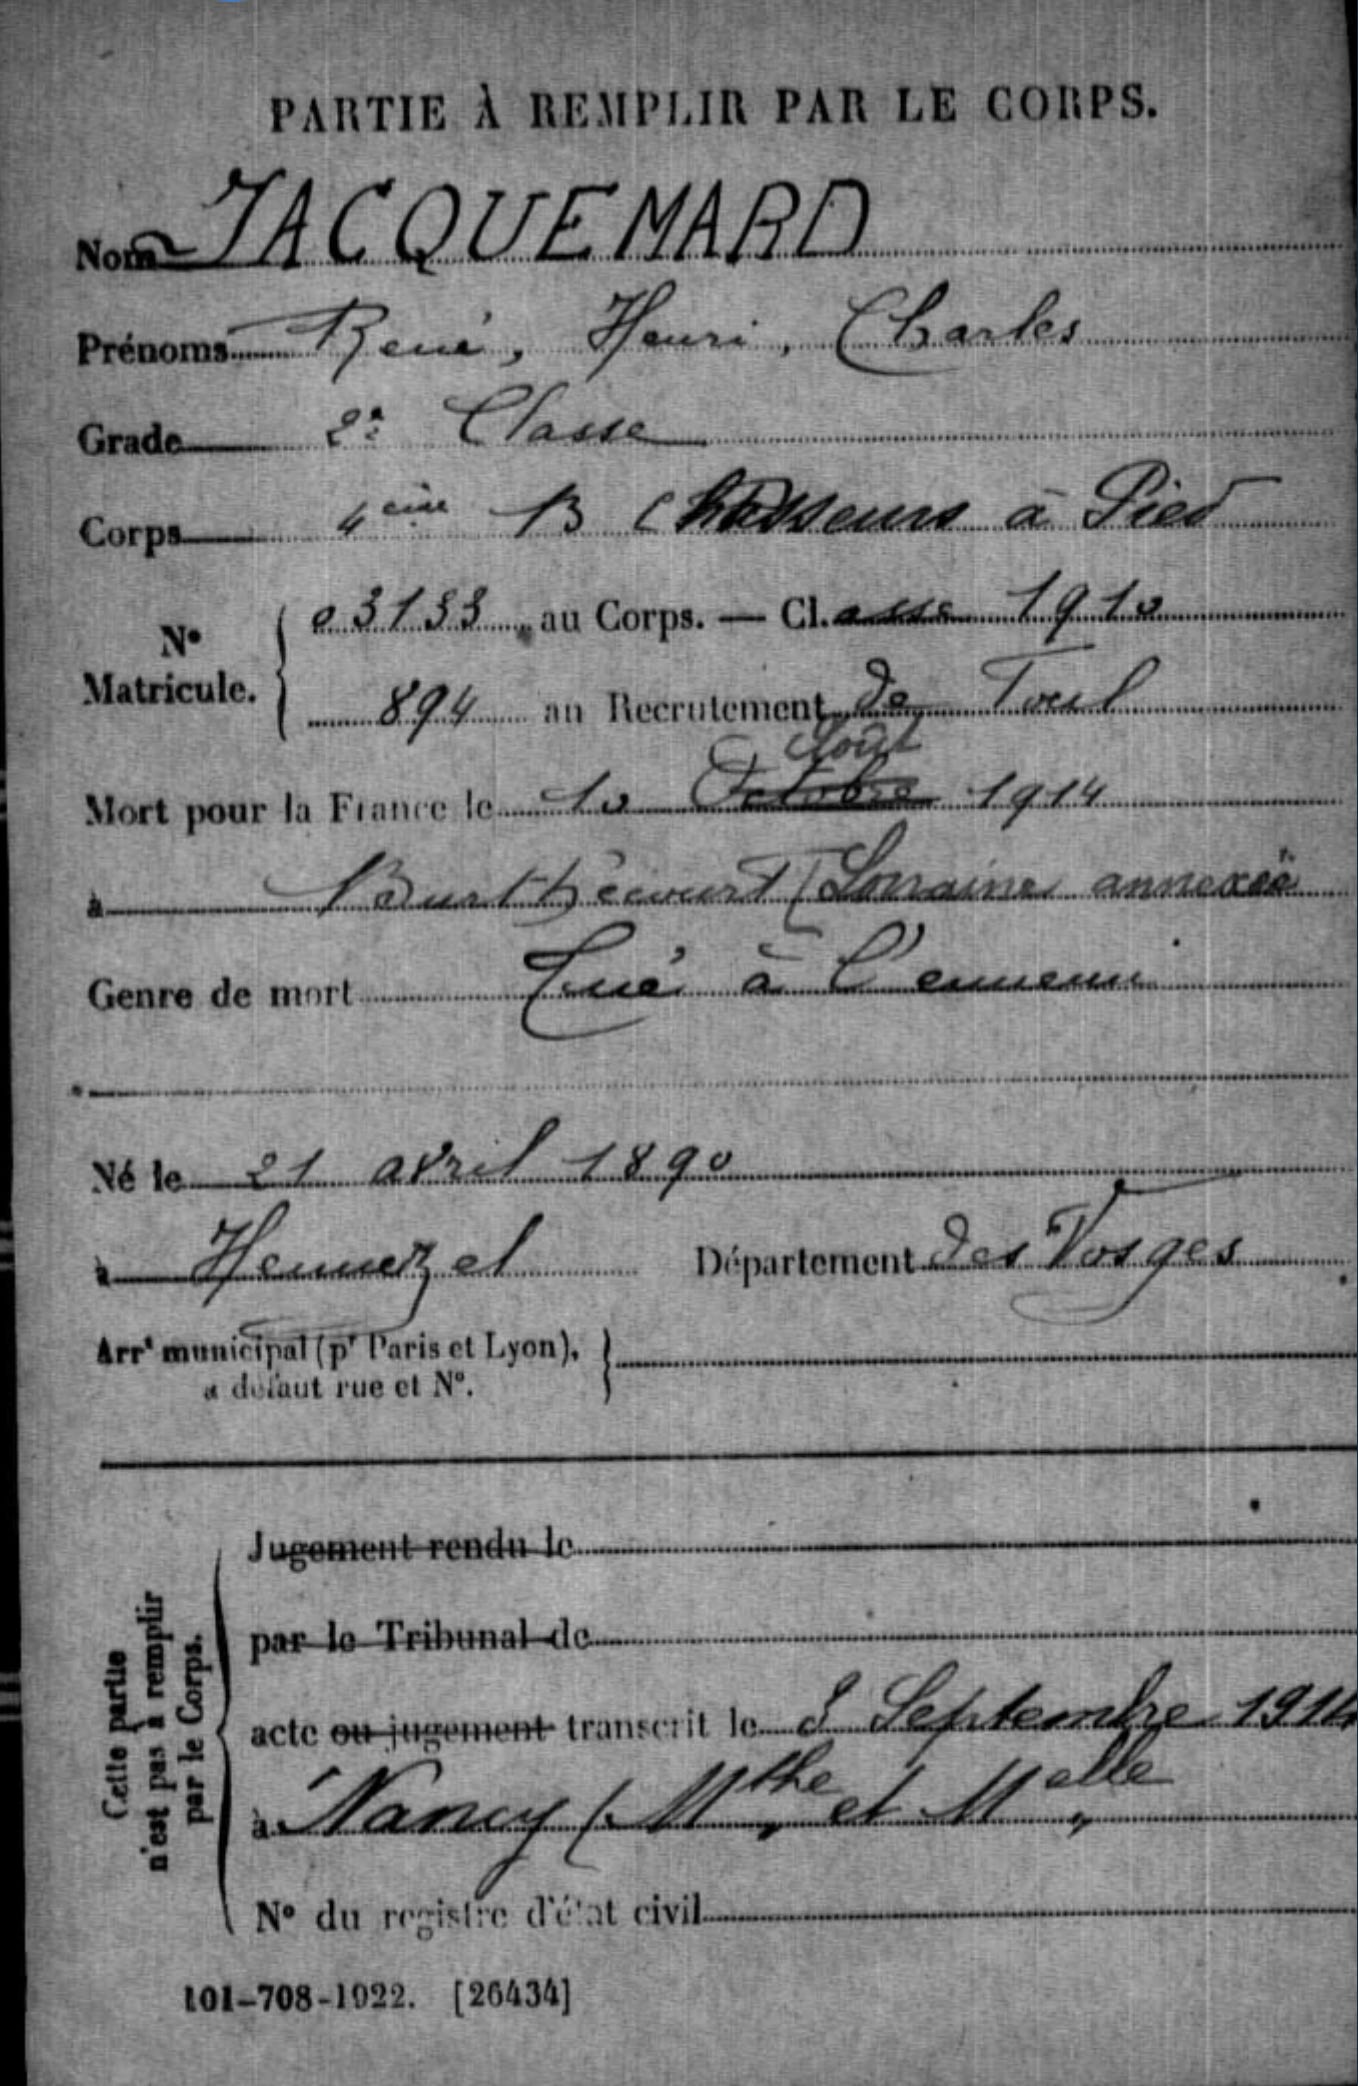 Henri Jacquemard's military death certificate from the Mémoire des Hommes online database.